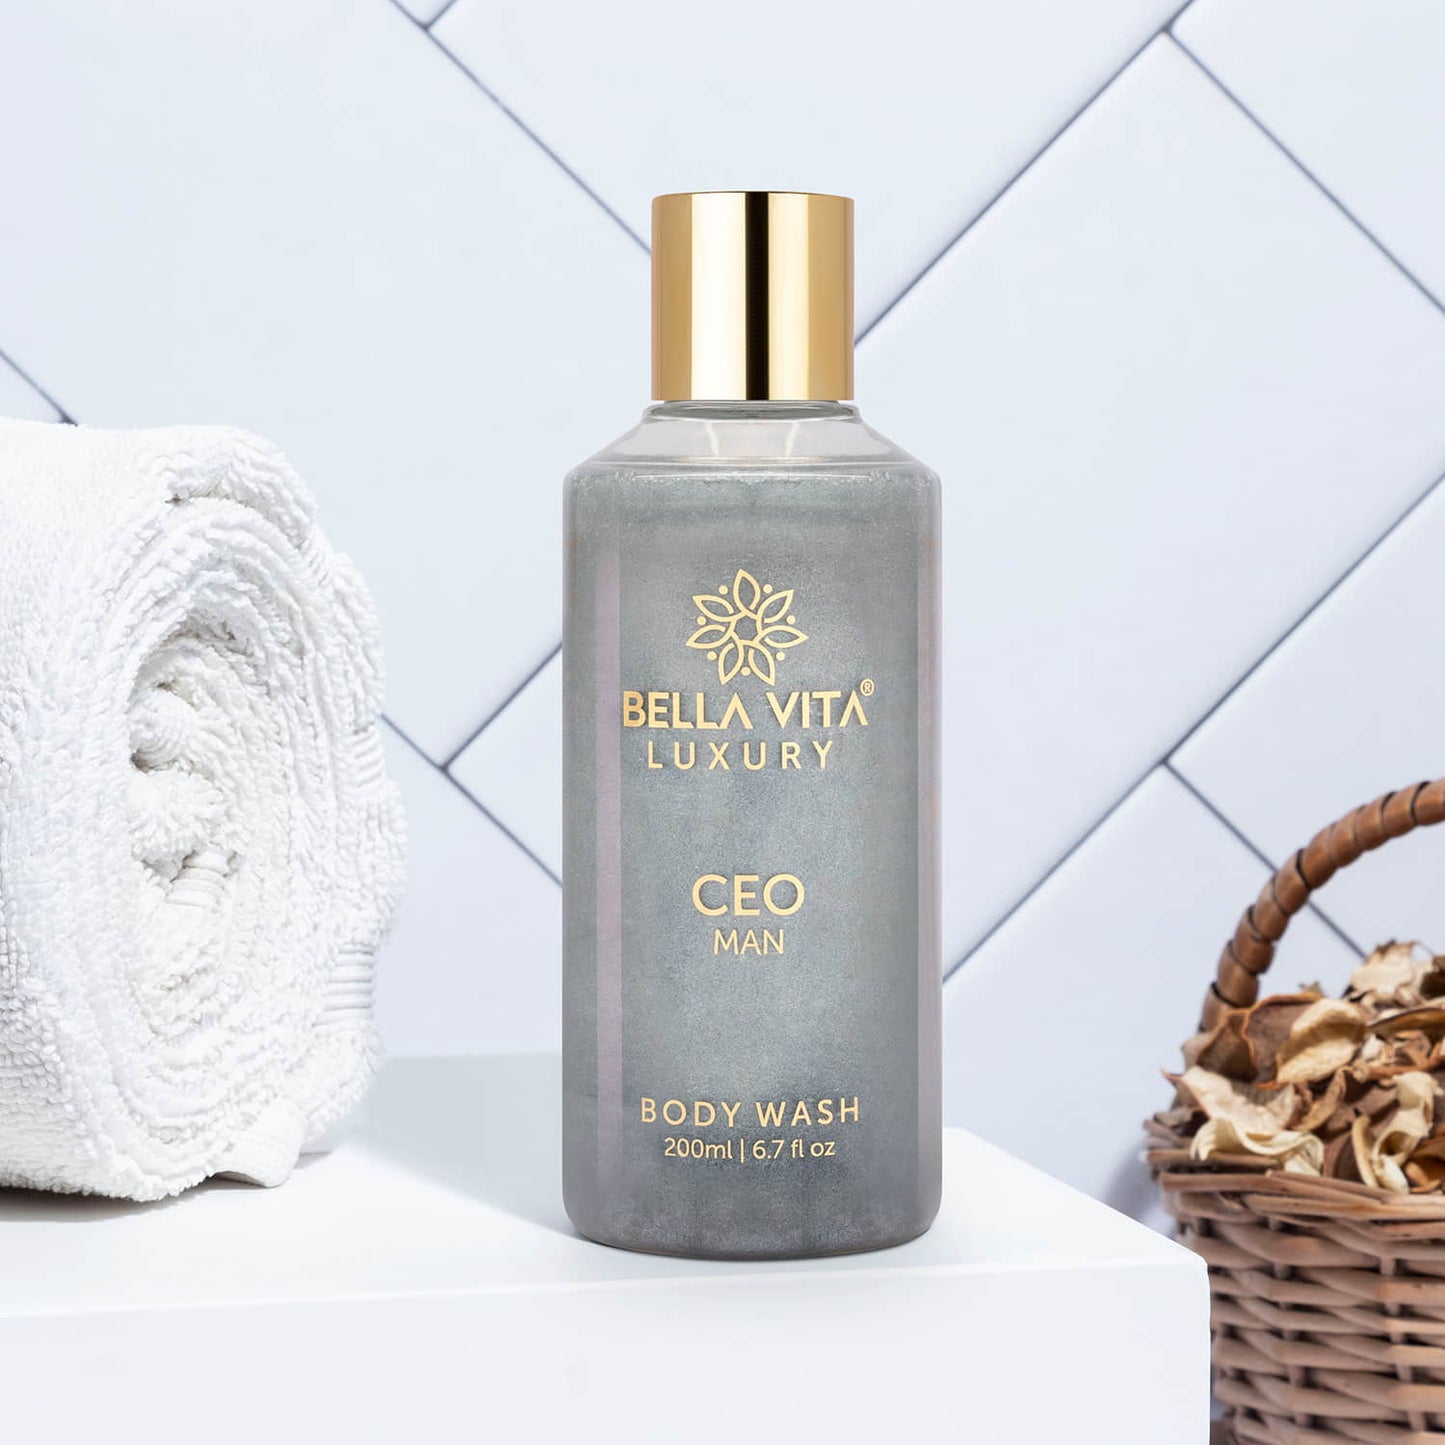 CEO MAN Body Wash - Bella Vita Luxury